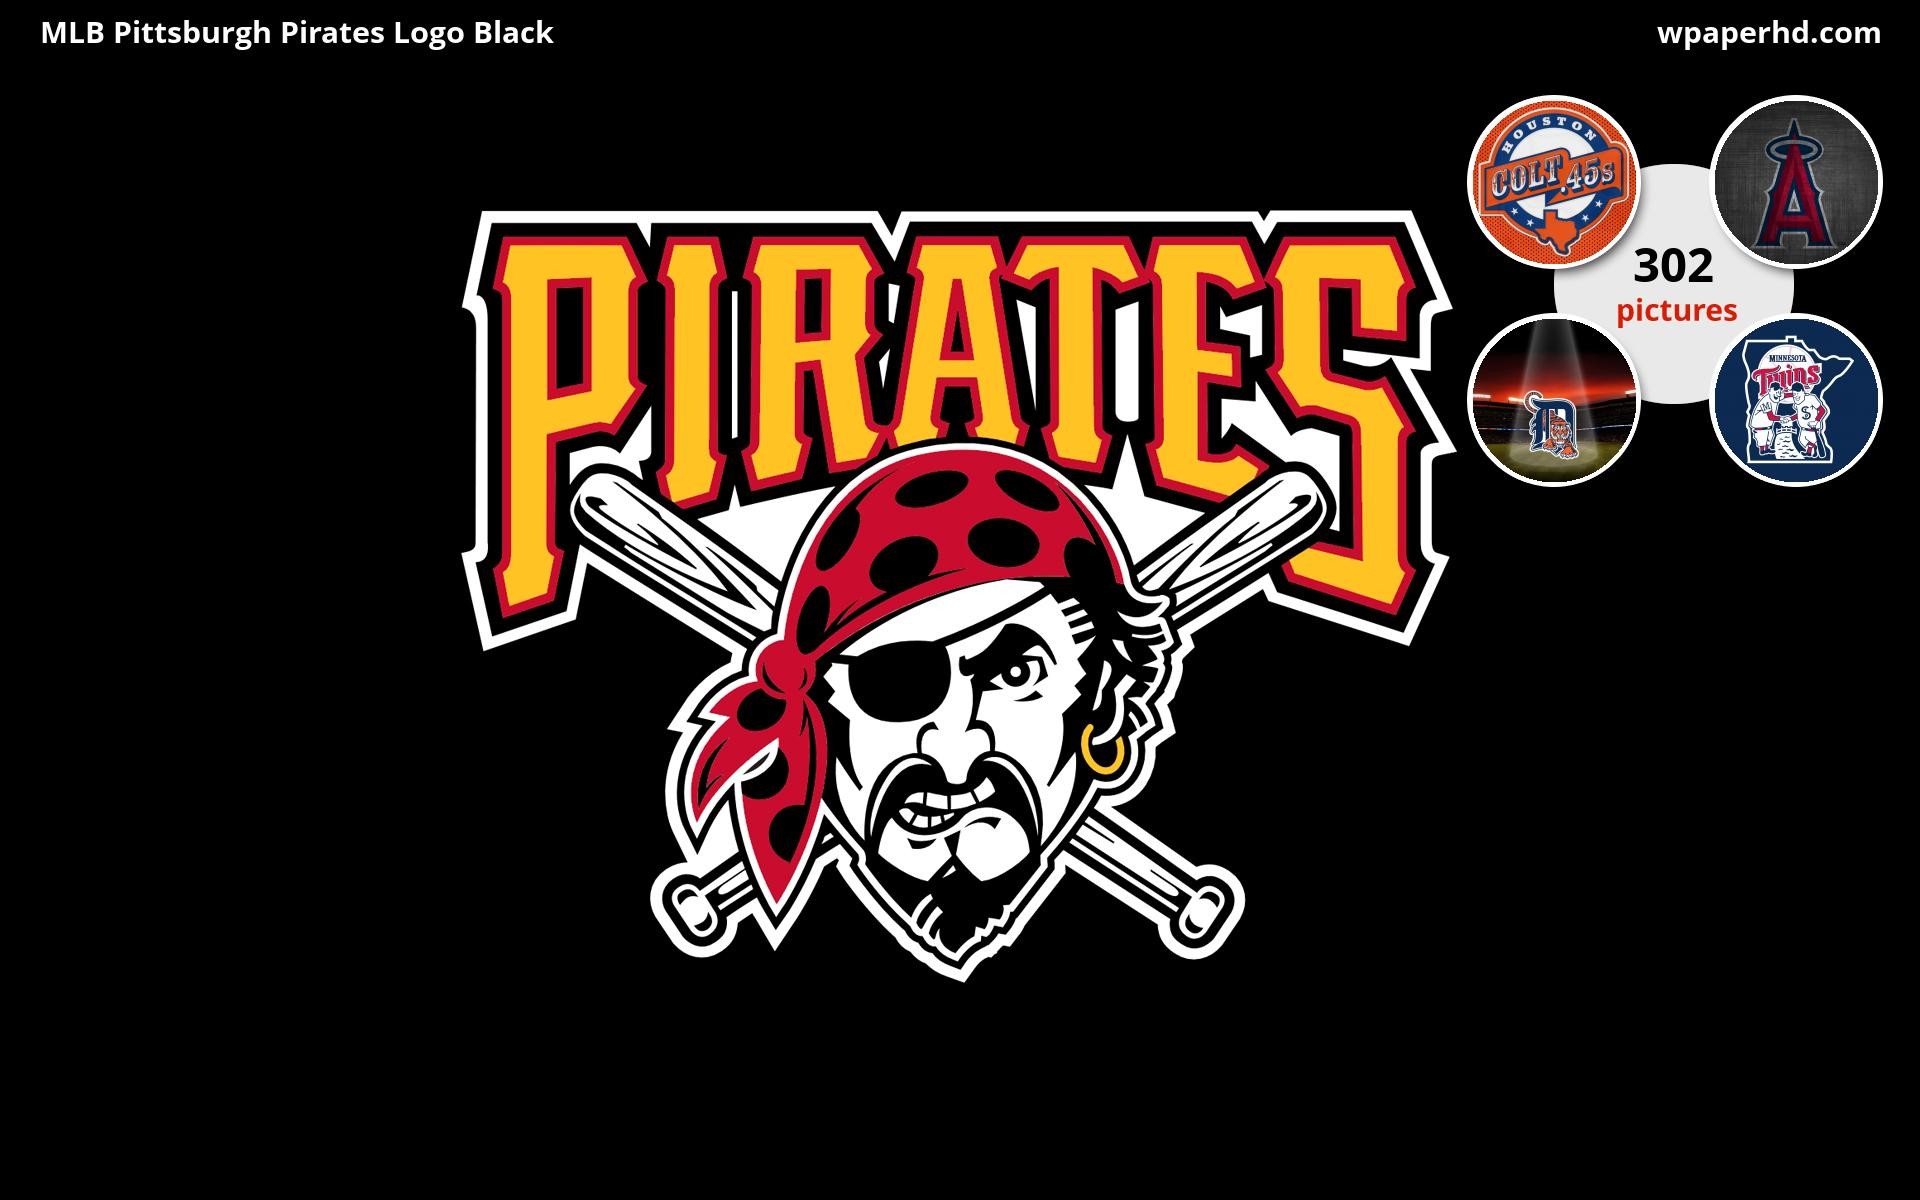 1920x1200 mlb pittsburgh pirates logo black wallpaper hd 2016 in baseball